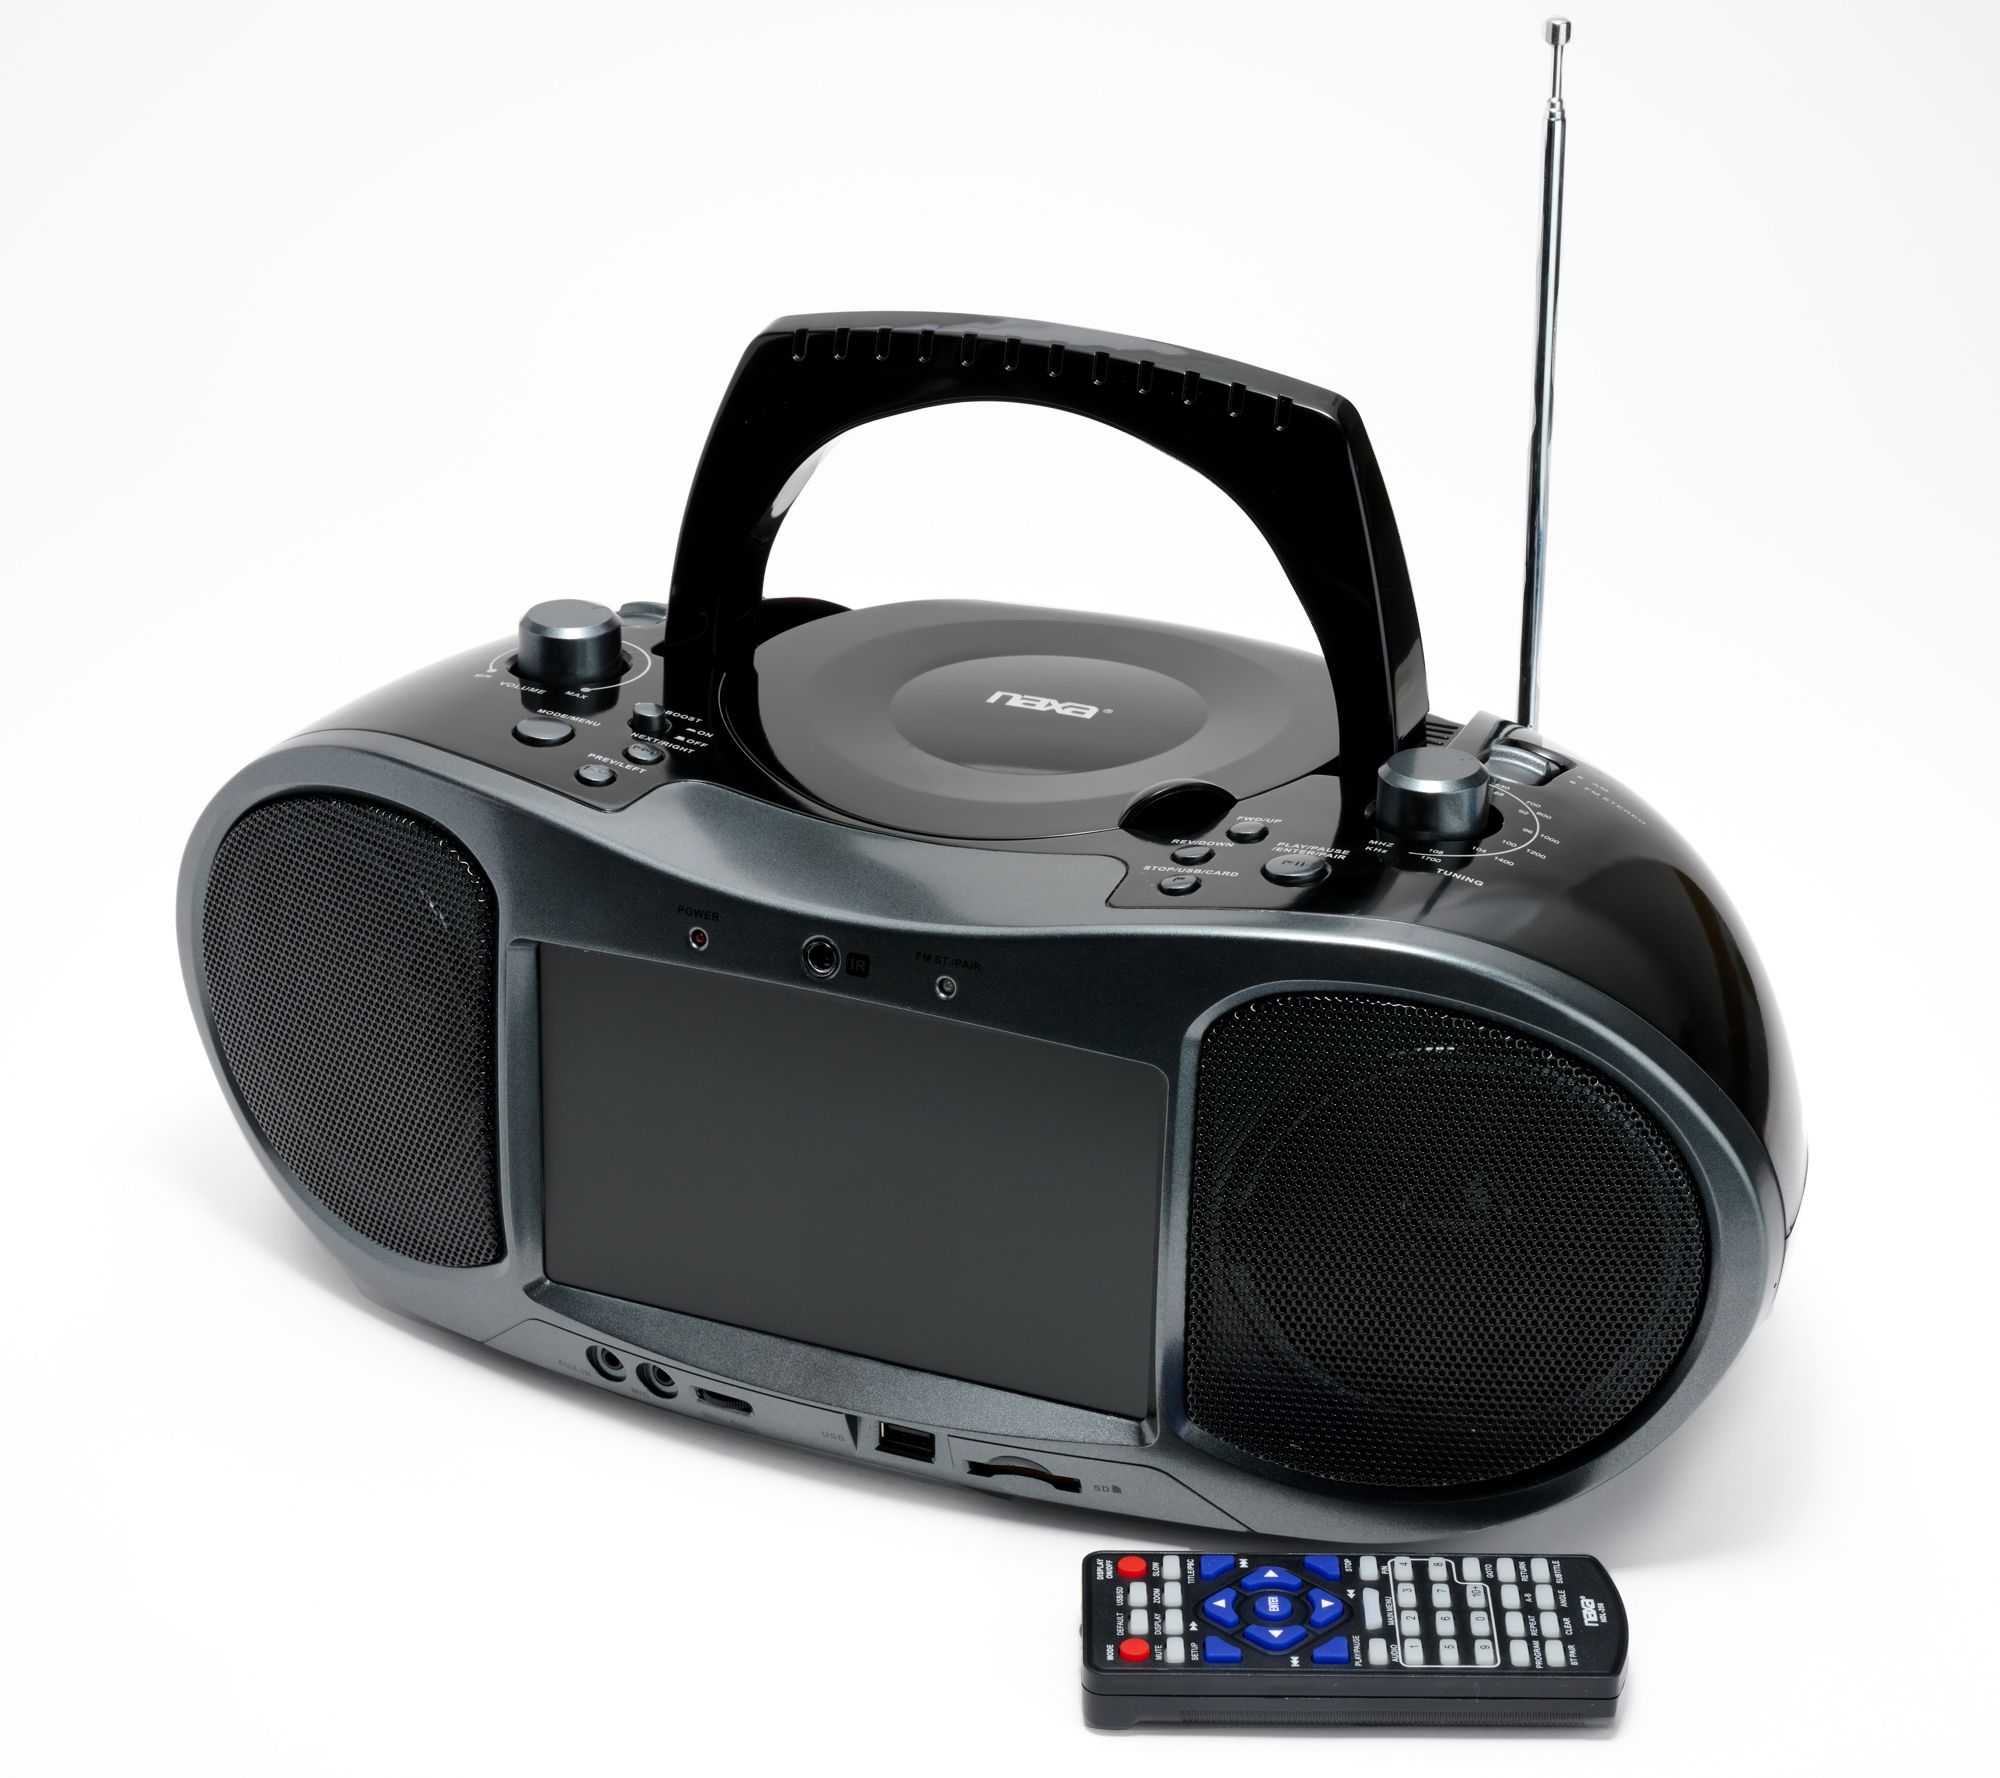 Dolphin Retrobox RTX-10 Bluetooth Speakers with FM Radio, USB Drive, RED